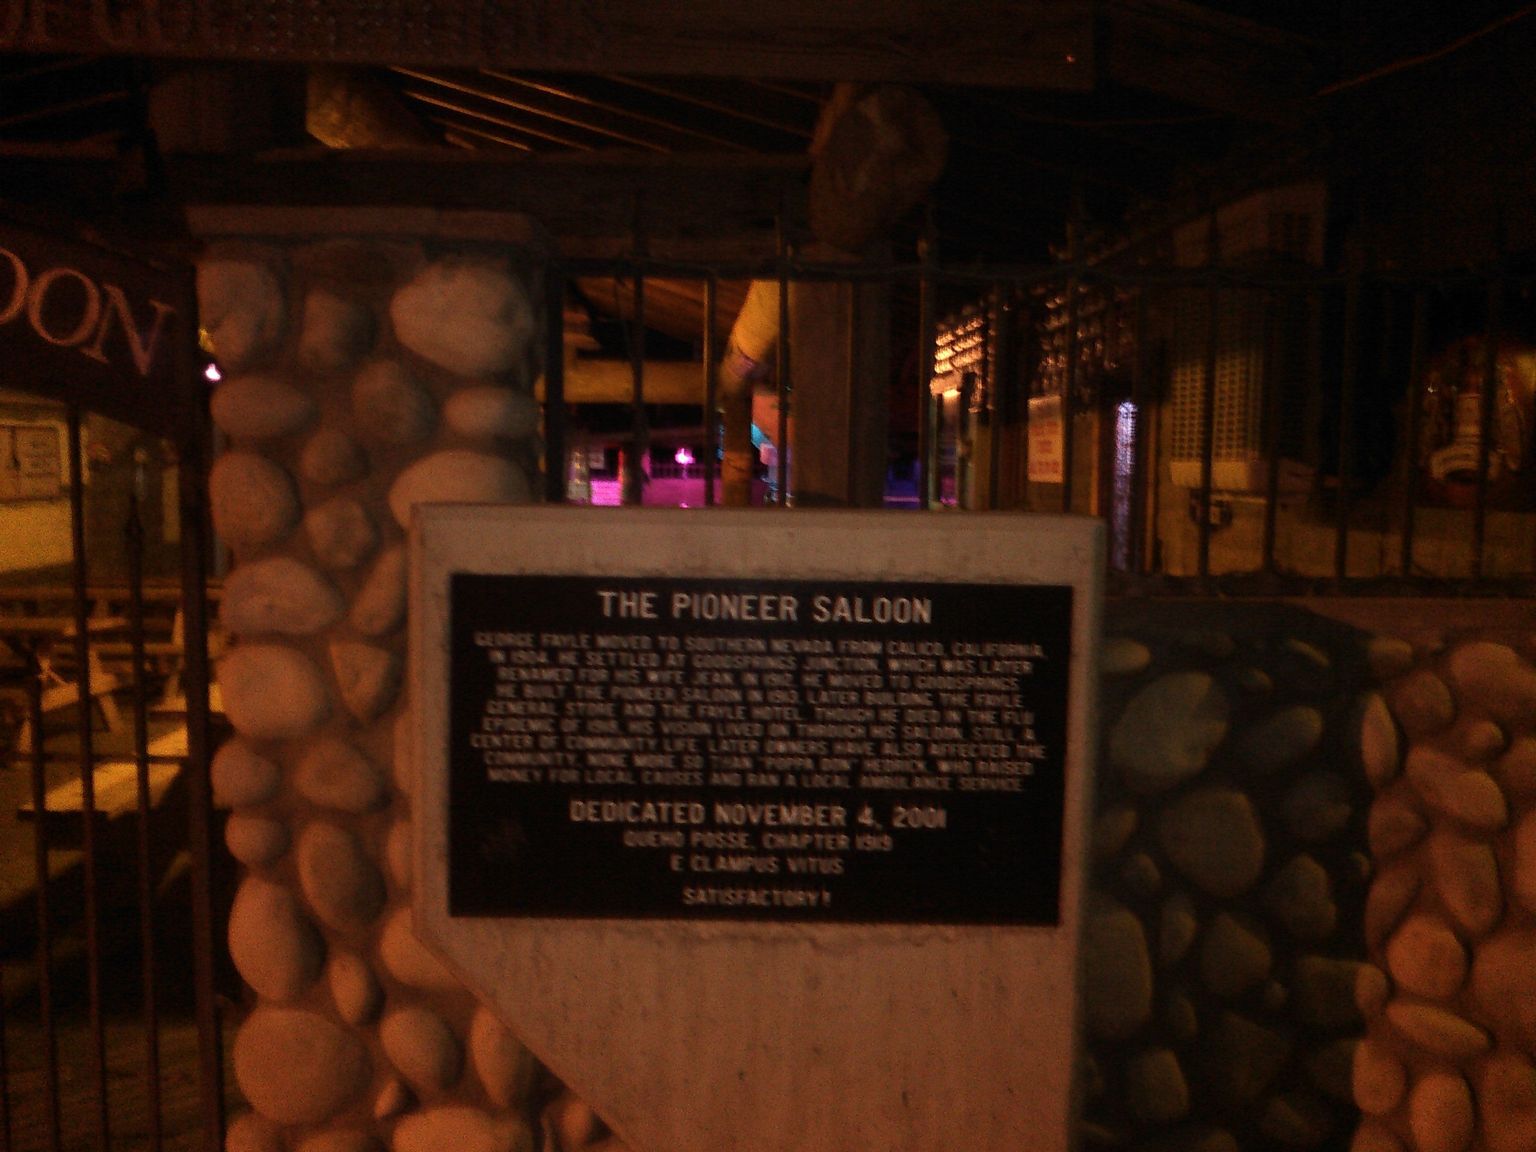 The pioneer saloon